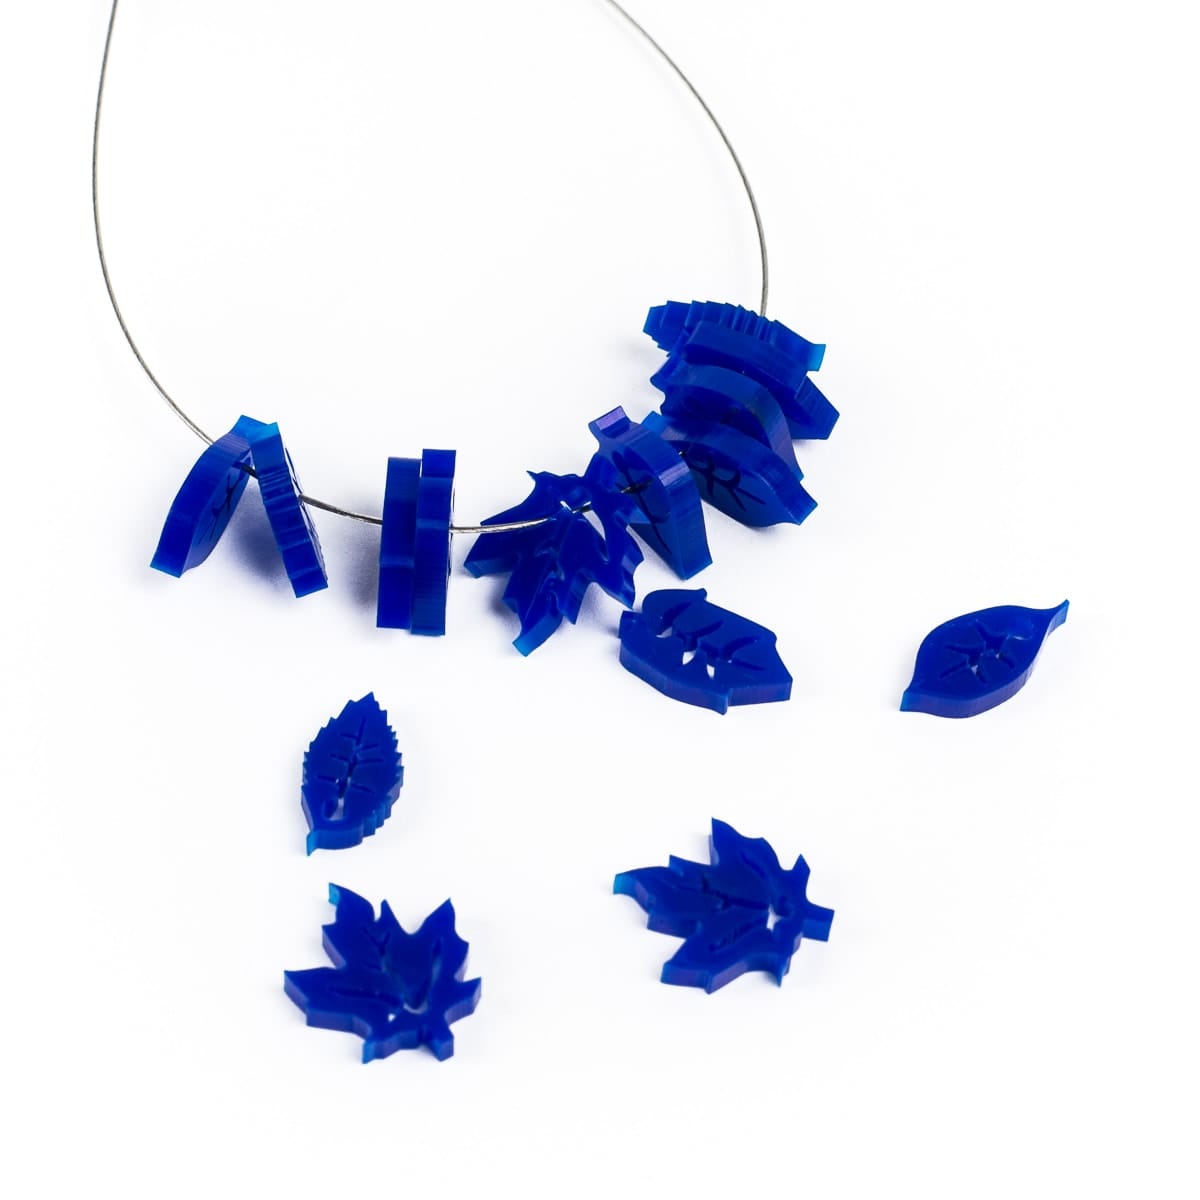 Blue Acrylic example product.